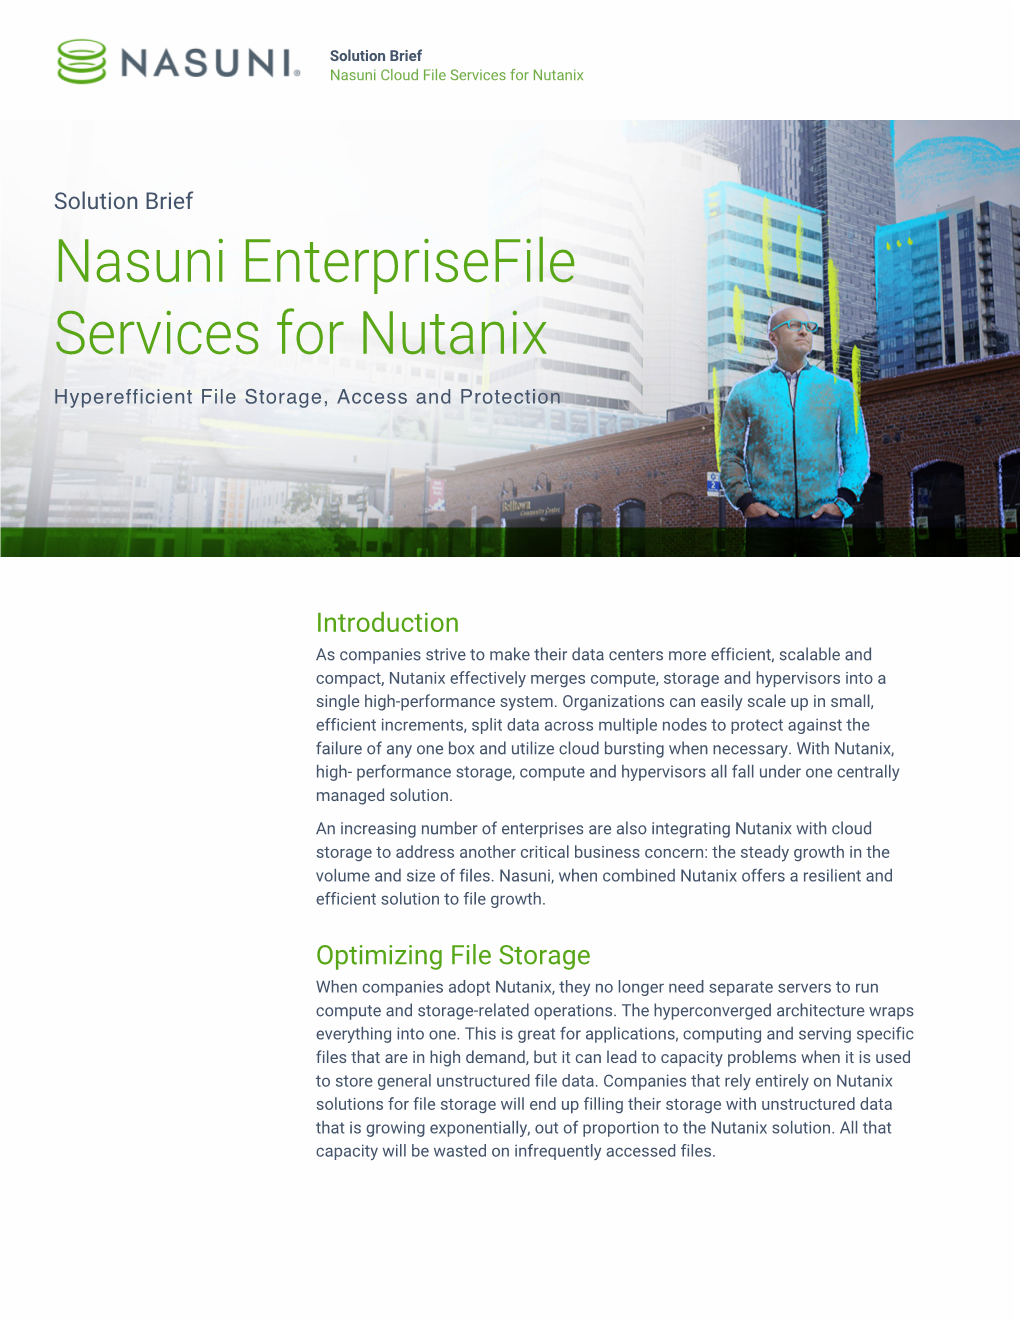 Nasuni Enterprisefile Services for Nutanix Hyperefficient File Storage, Access and Protection